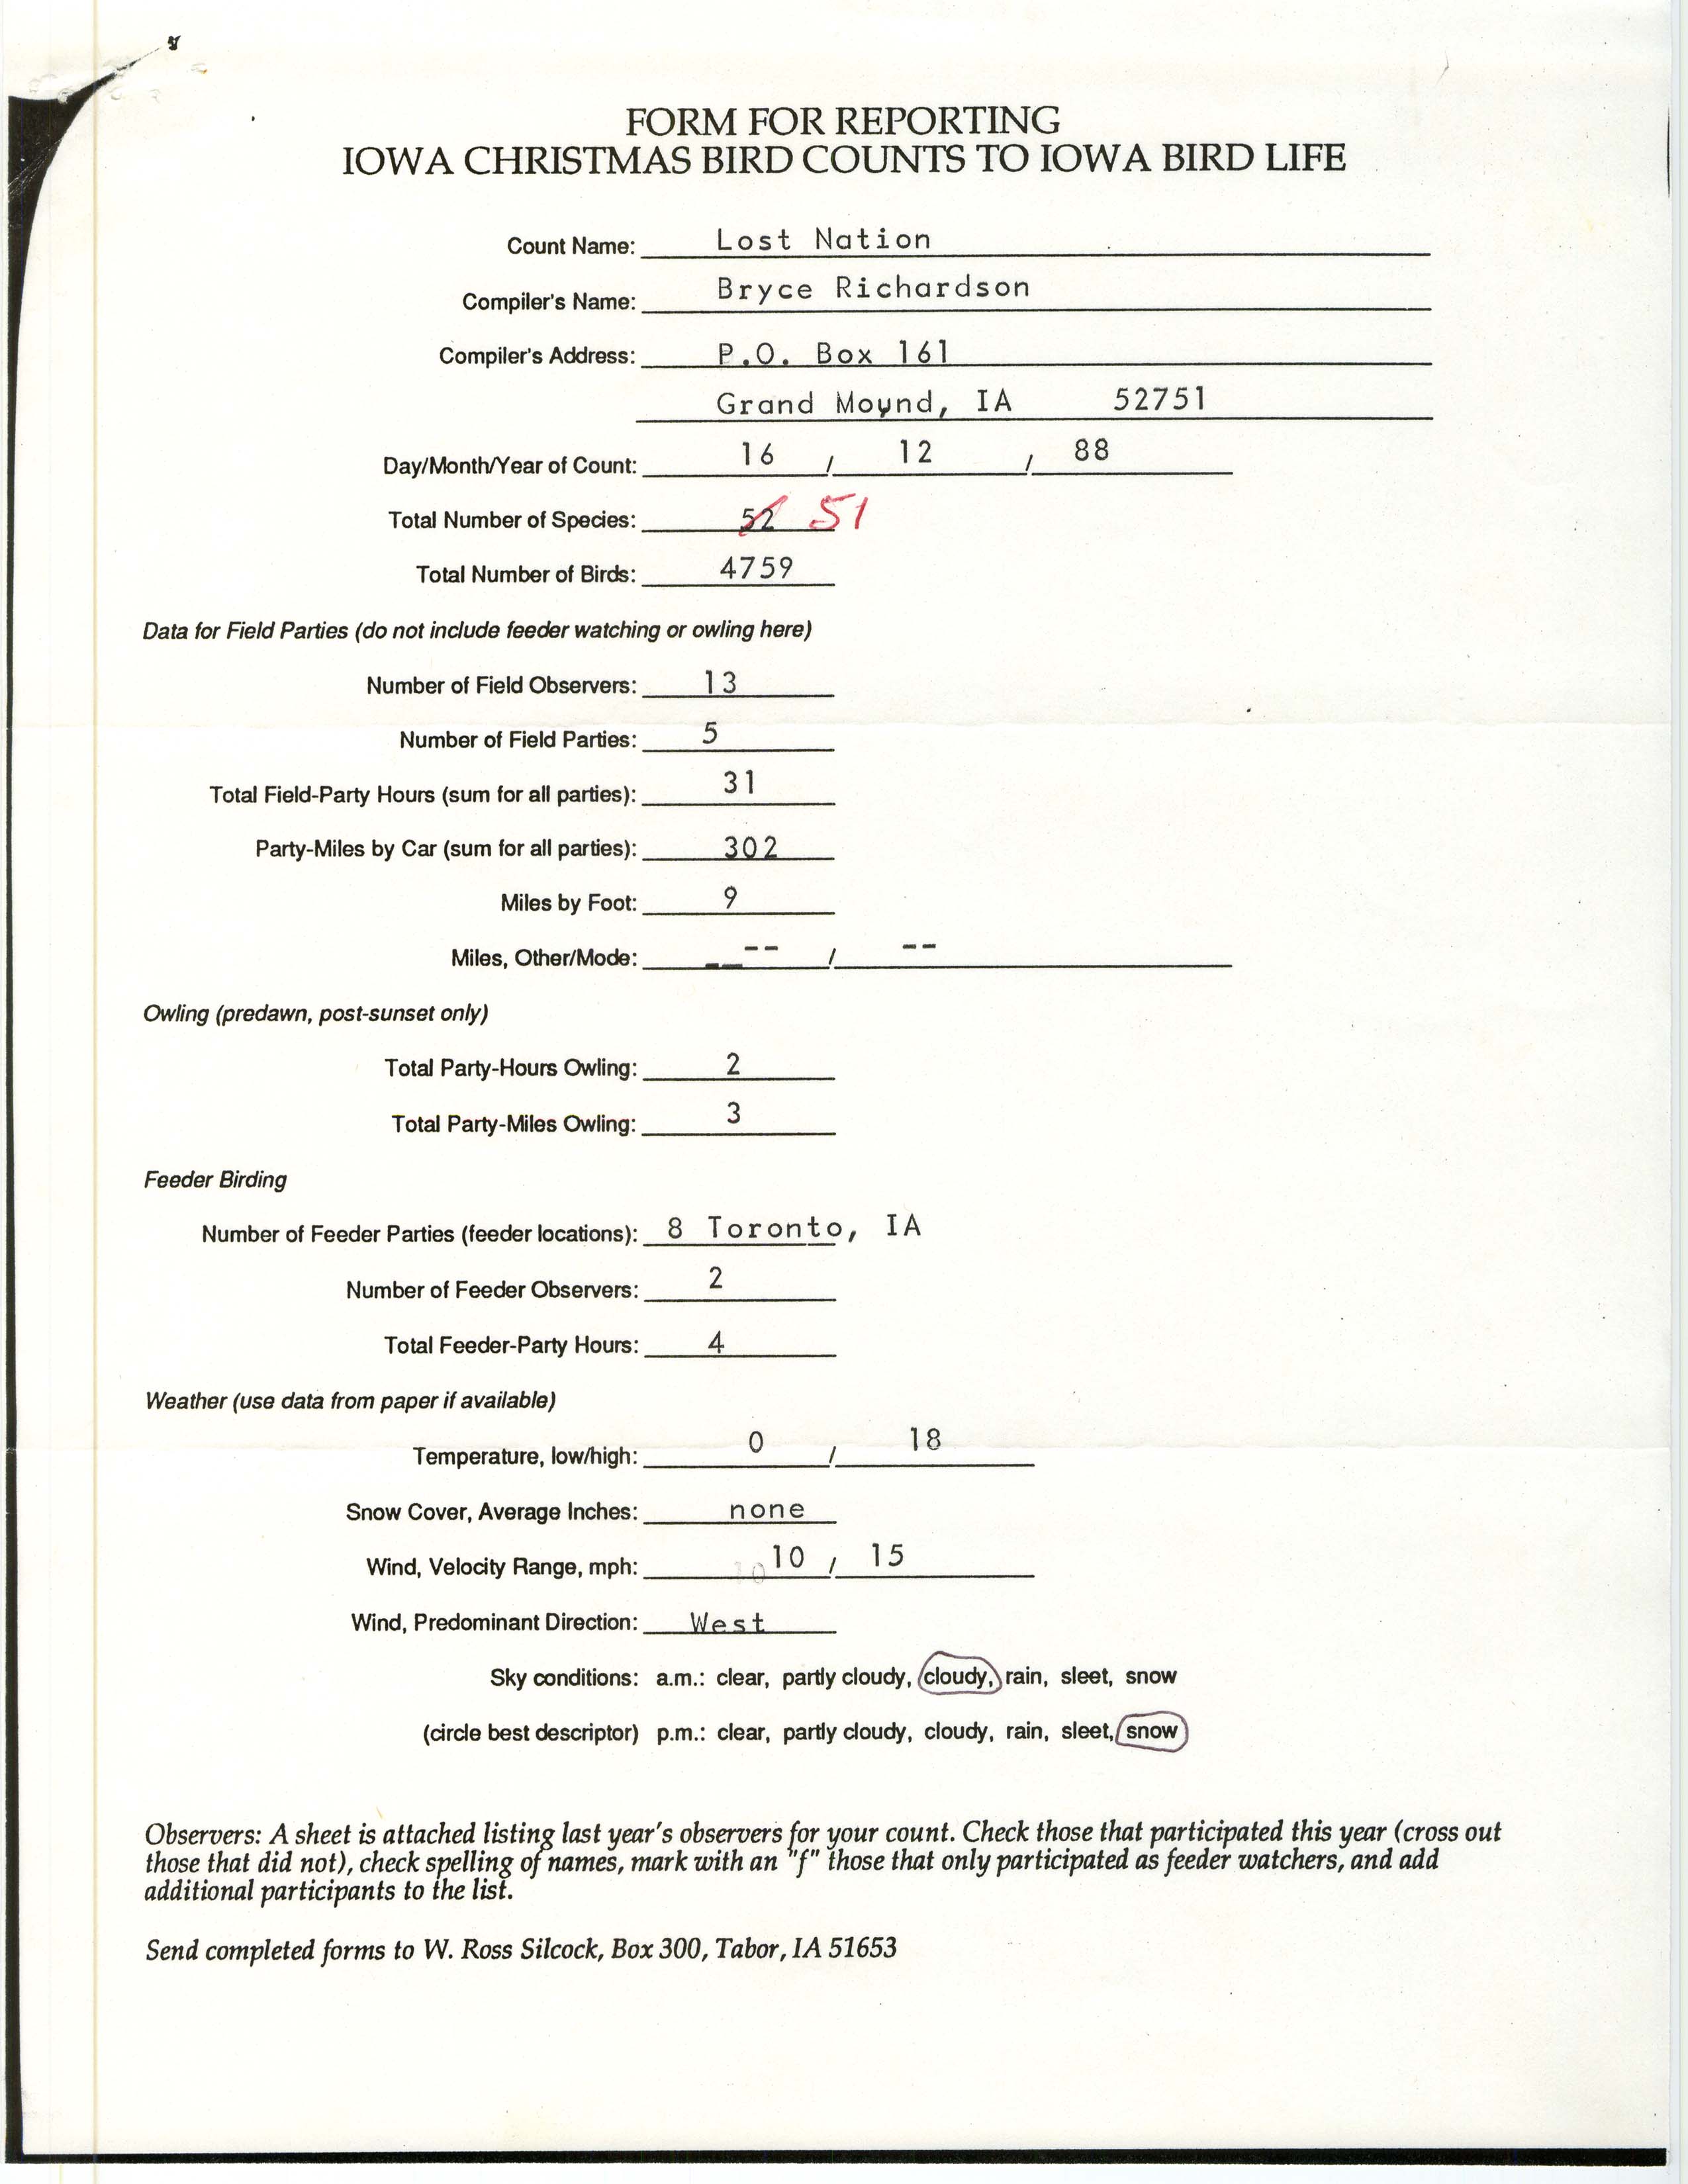 Form for reporting Iowa Christmas bird counts to Iowa Bird Life, Bryce A. Richardson, December 16, 1988